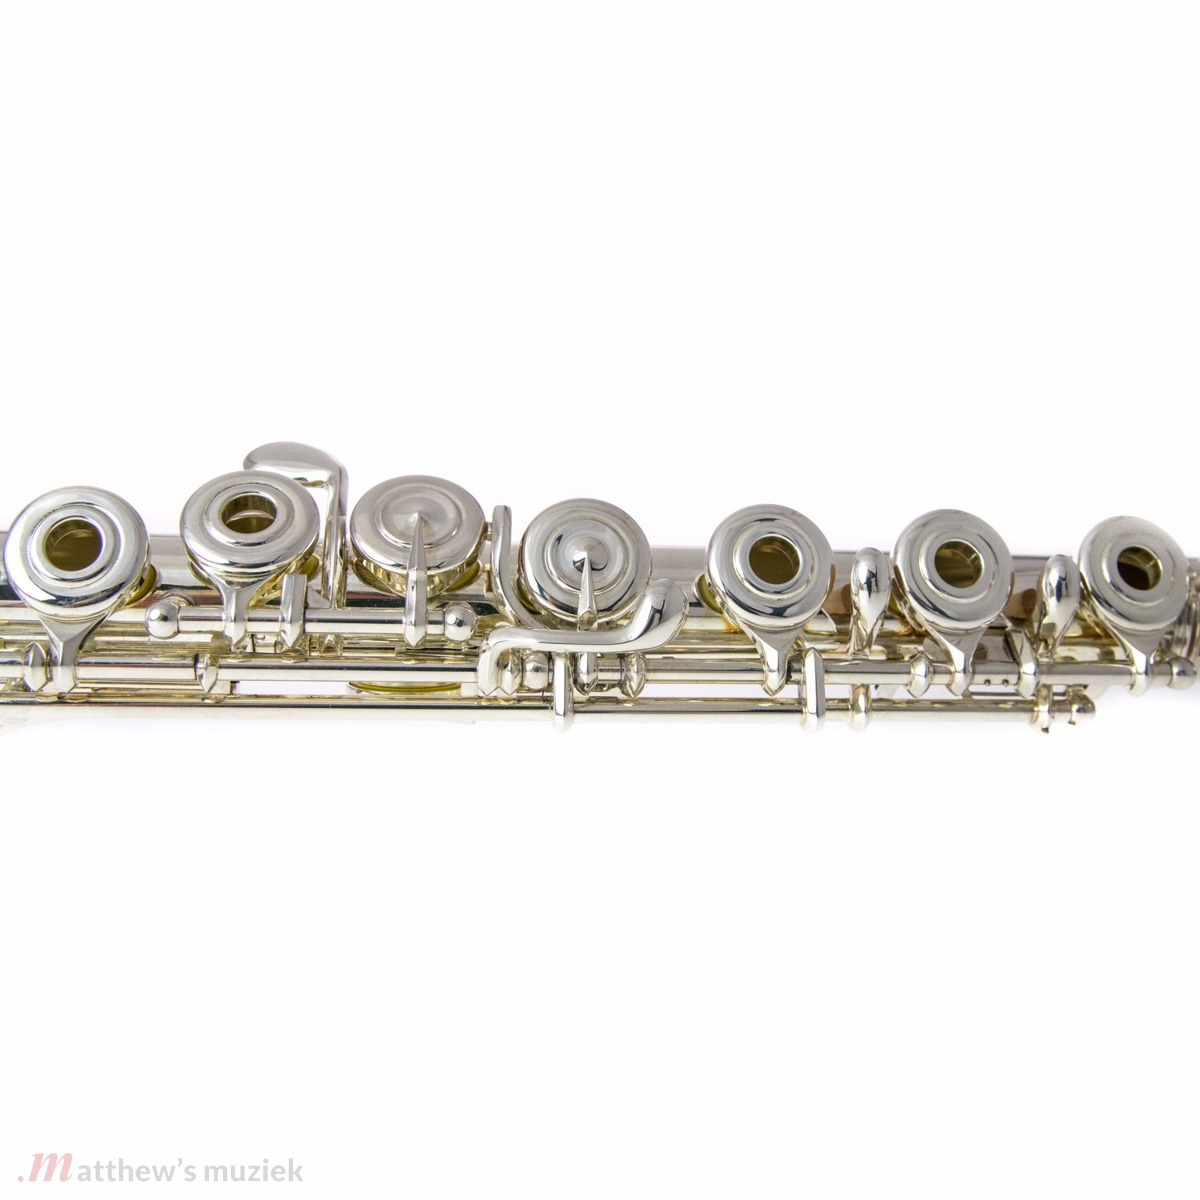 Haynes Flute - Classic Q2 - RBE w/14 karat Gold Riser